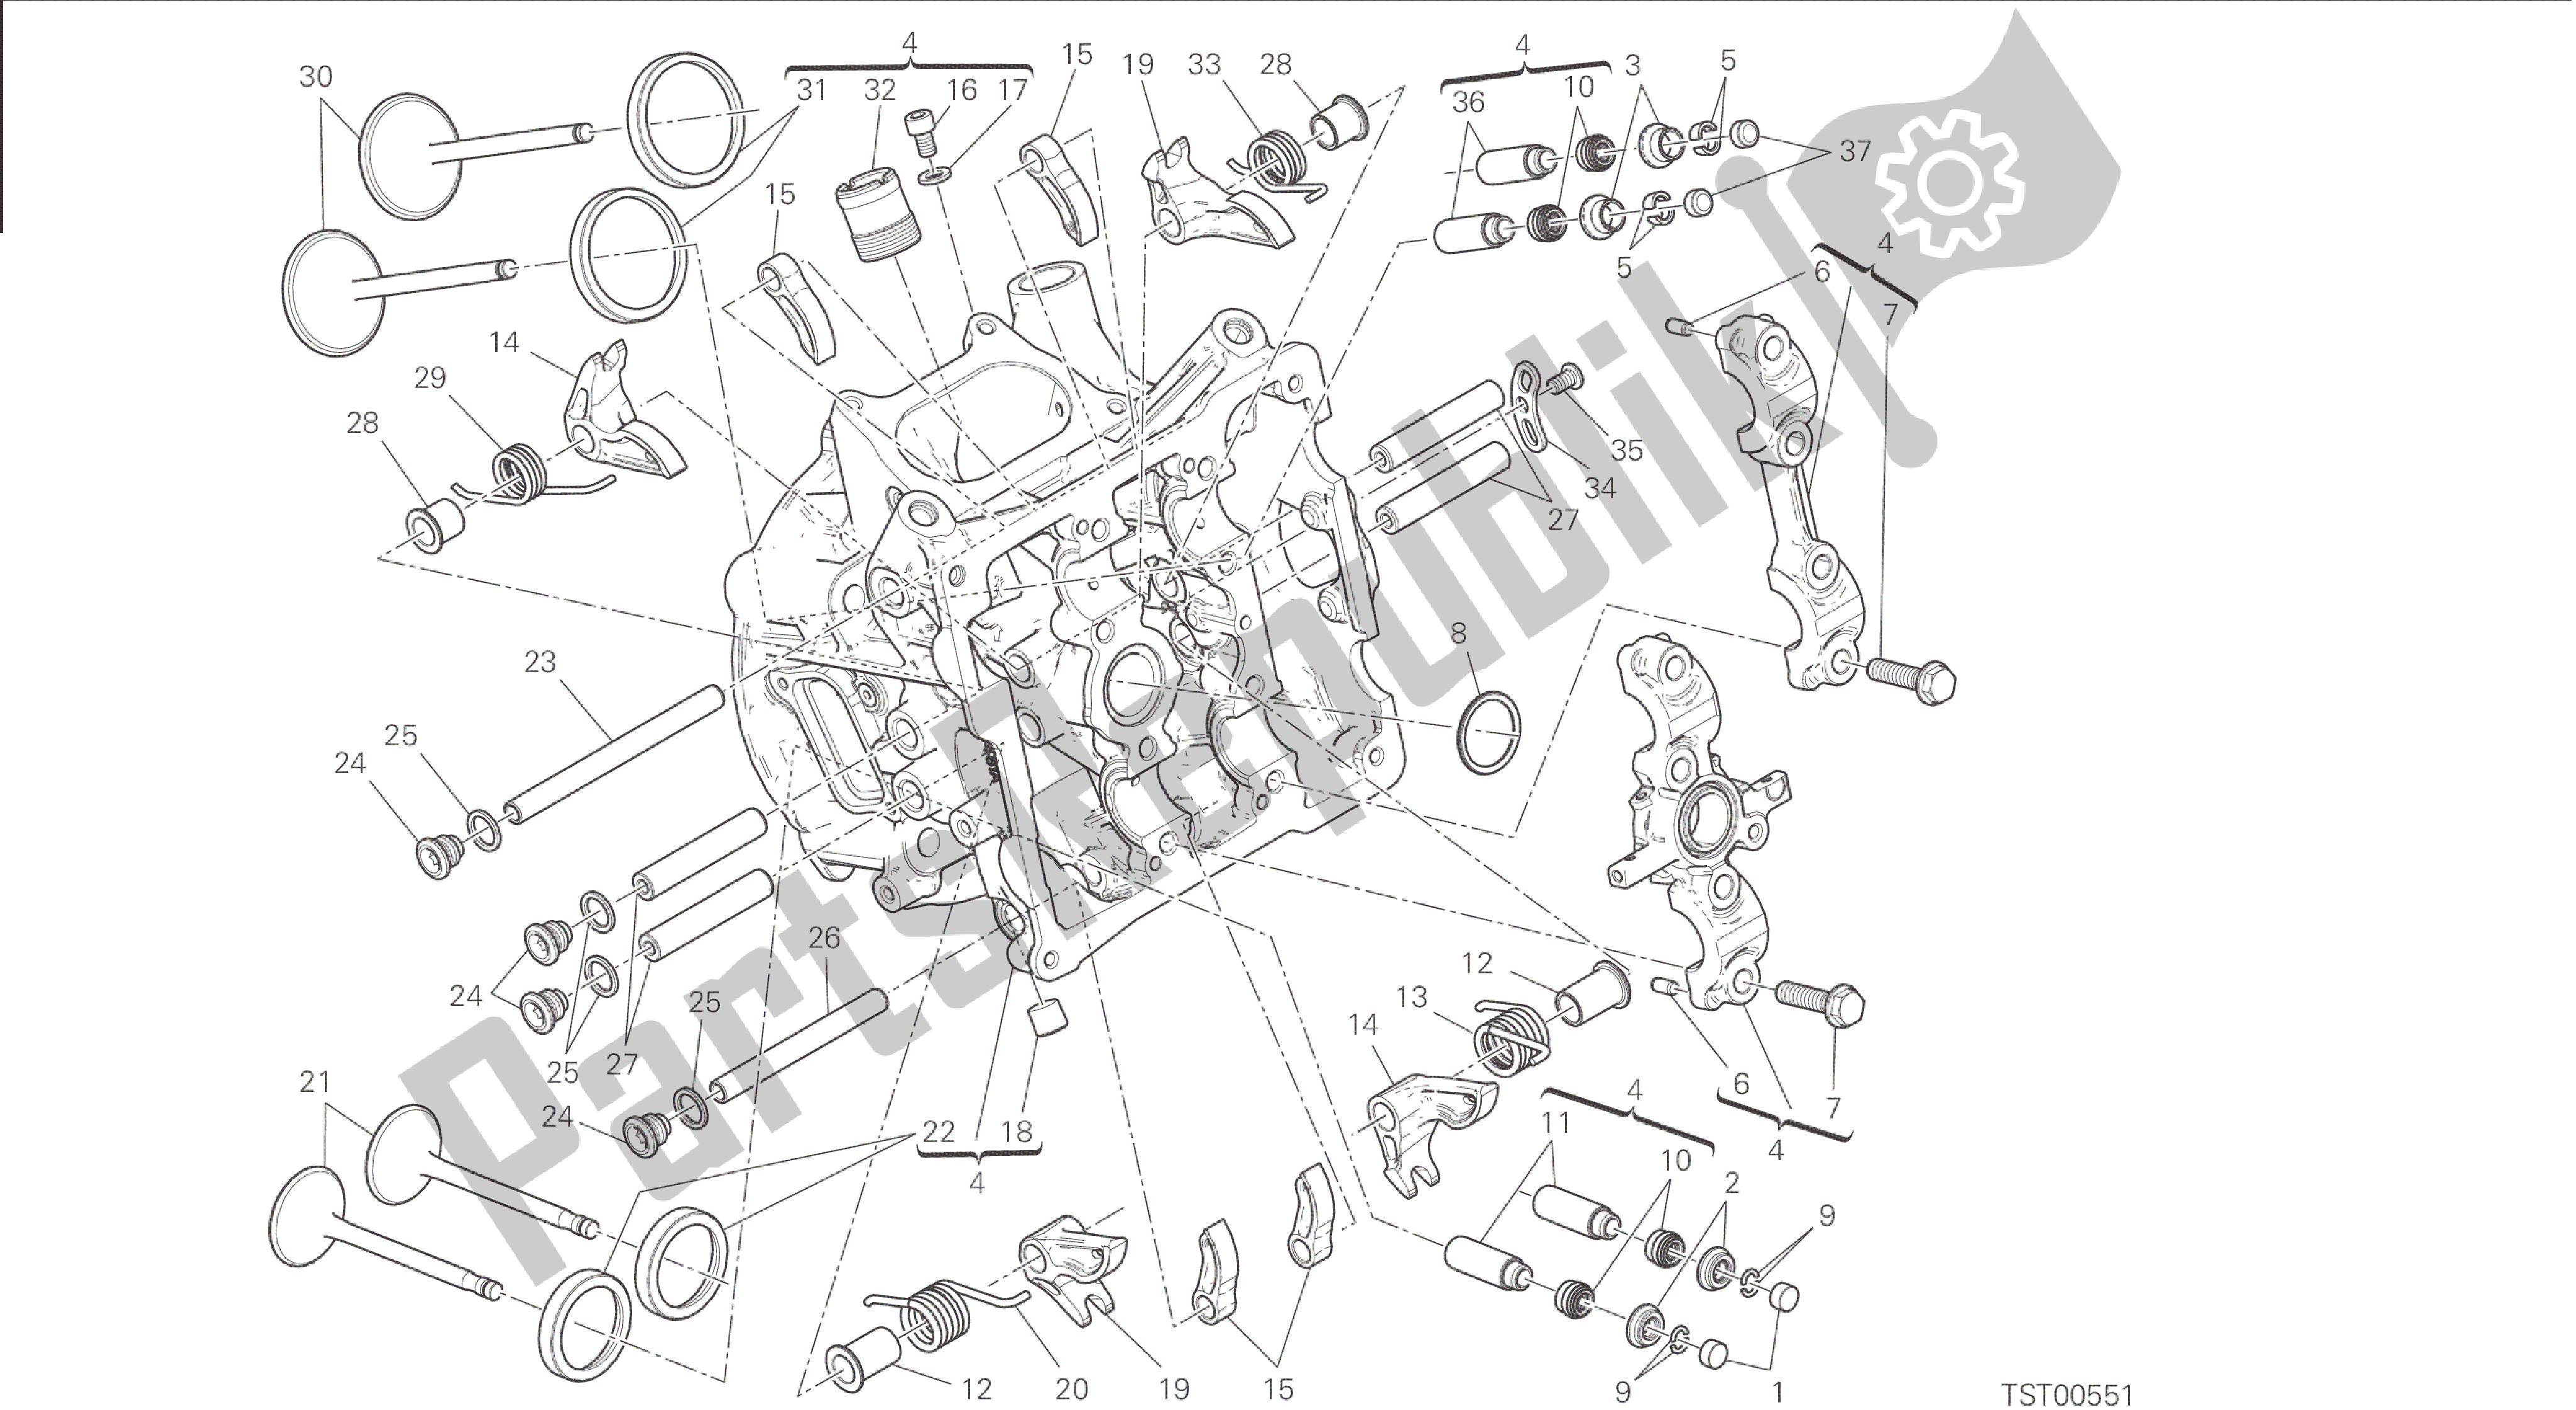 Alle onderdelen voor de Tekening 014 - Horizontale Kop [mod: 1199 R; Xst: Aus, Eur, Fra, Jap, Twn] Groepsmotor van de Ducati Panigale 1198 2015